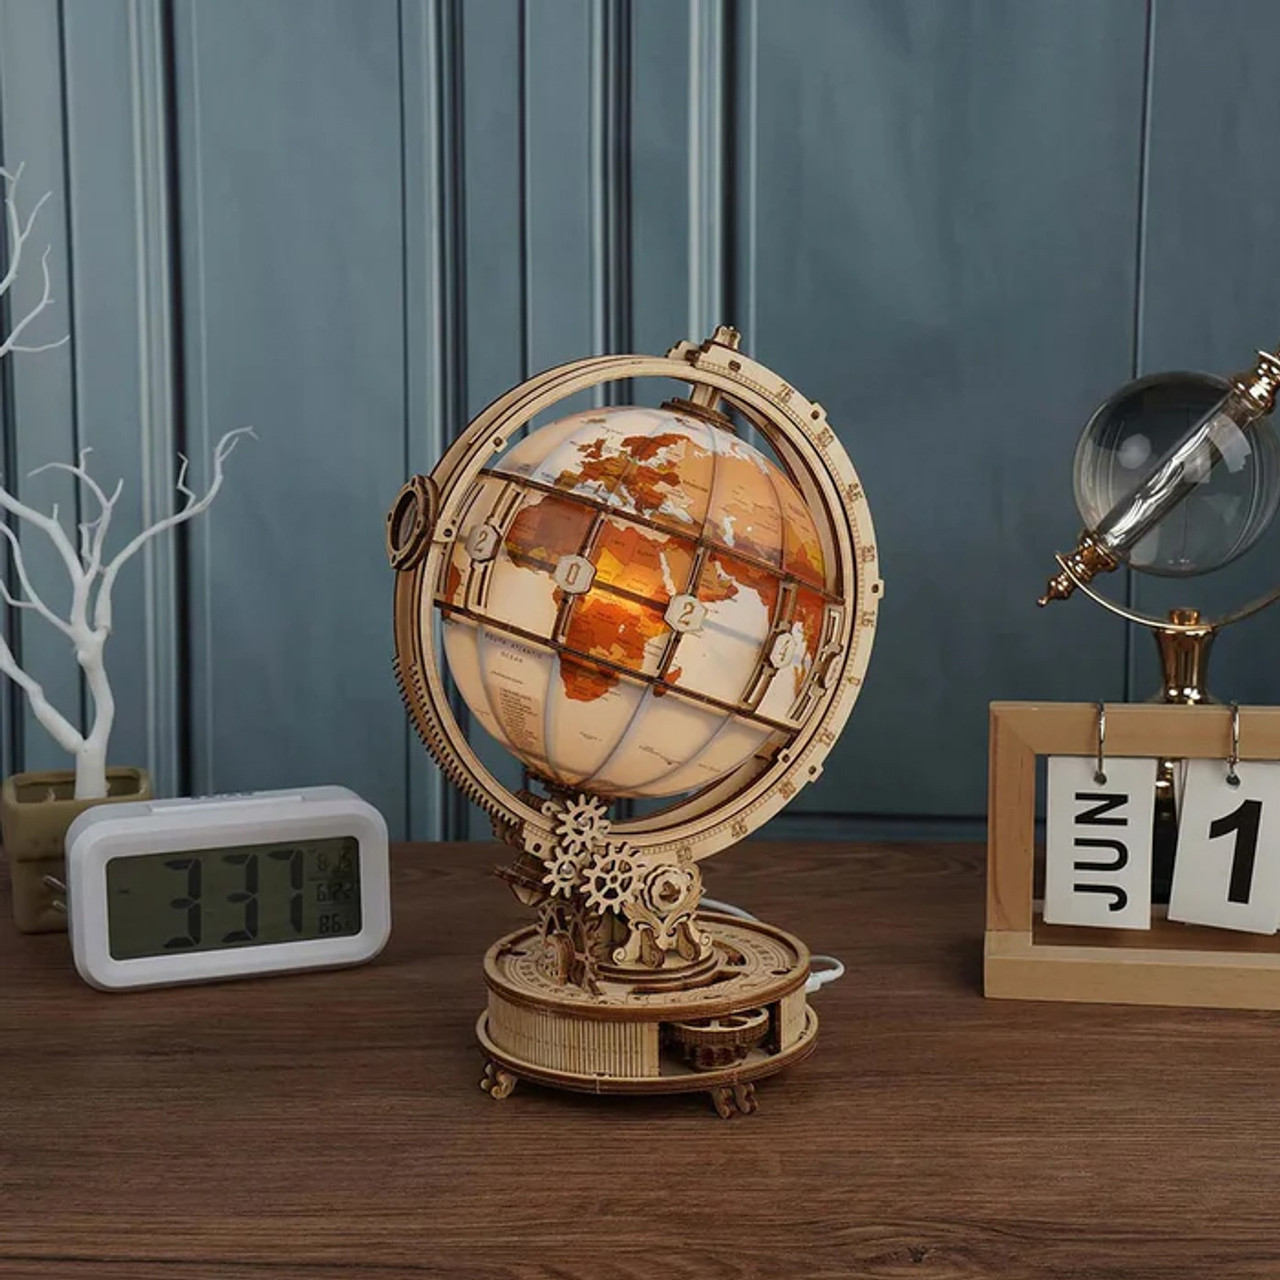 Luminous Globe 3D Wooden Puzzle *in-store